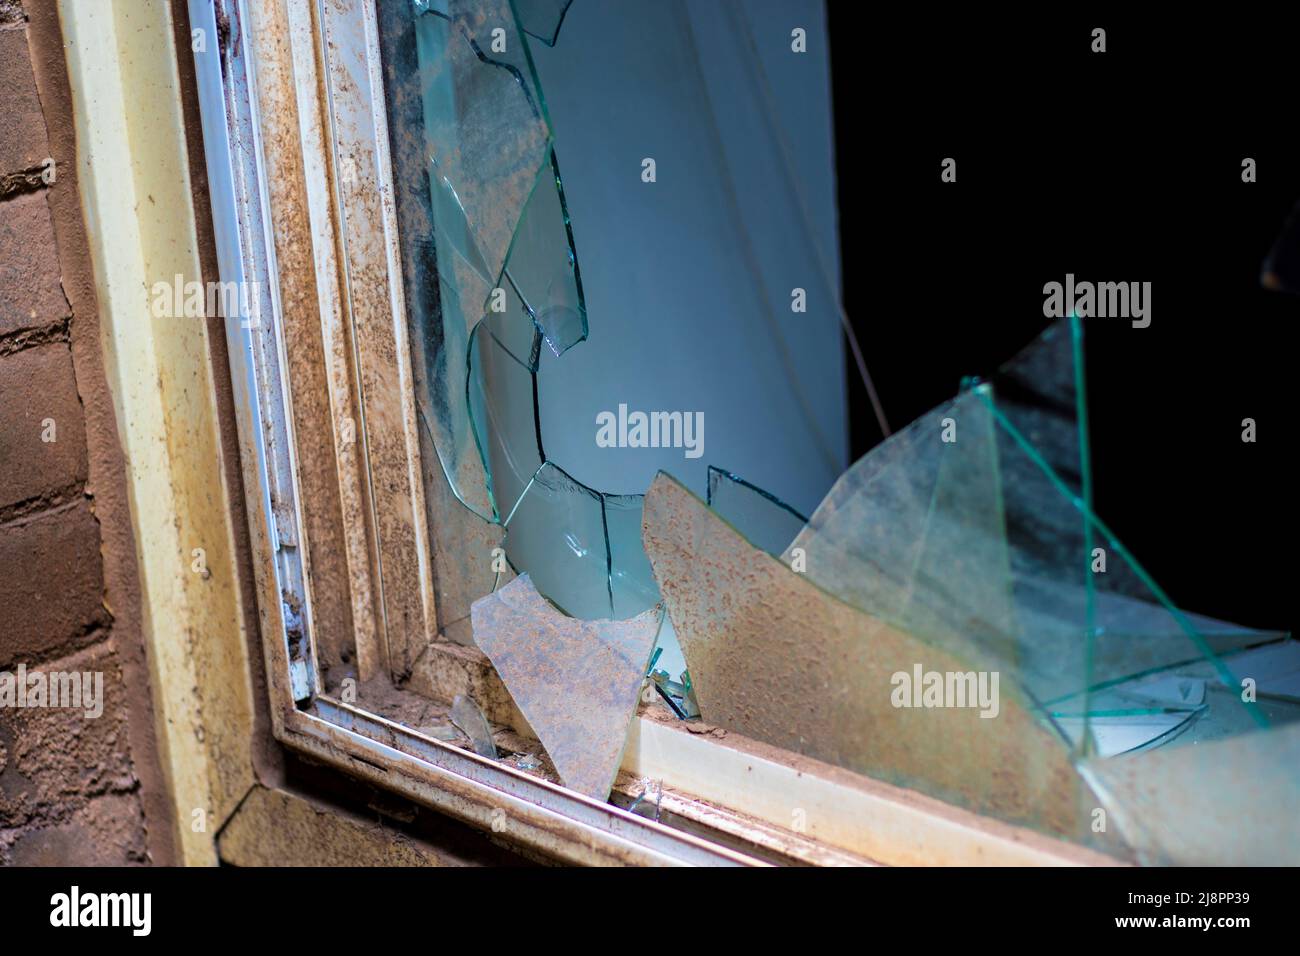 Broken bathroom window broken glass. Crime scene investigation burglar smashing glass window. Stock Photo